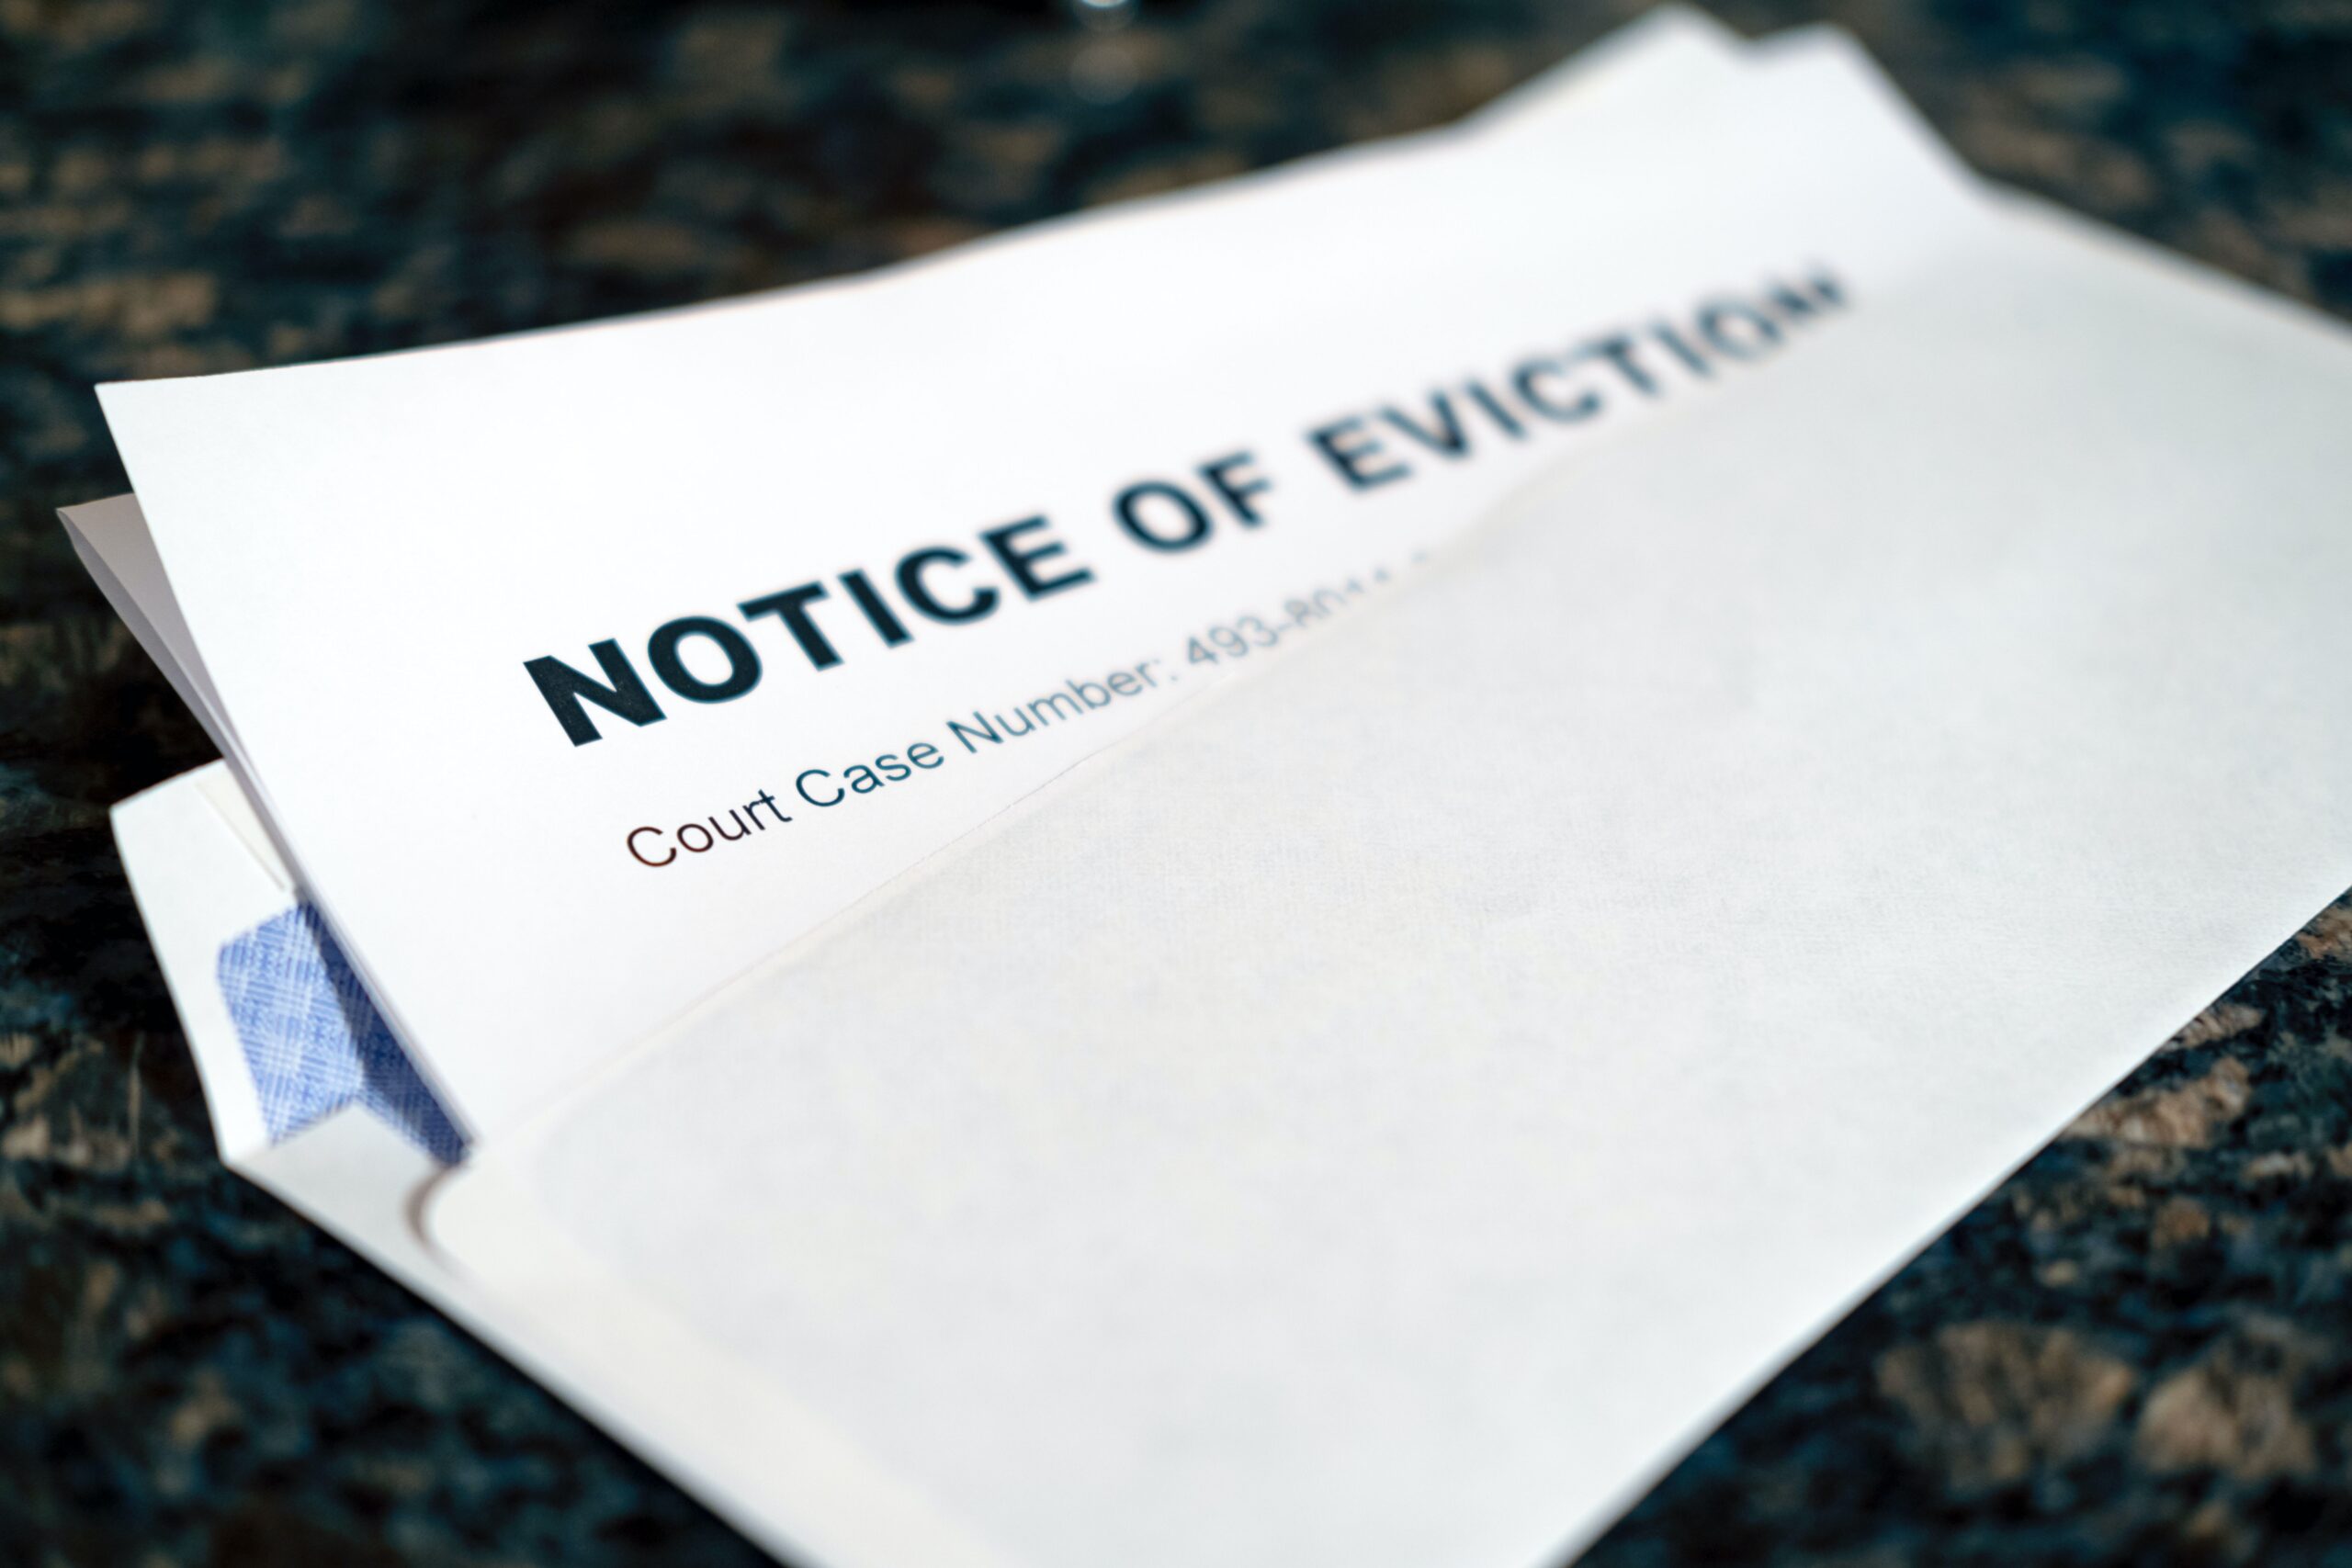 Los Angeles County eviction moratorium ends